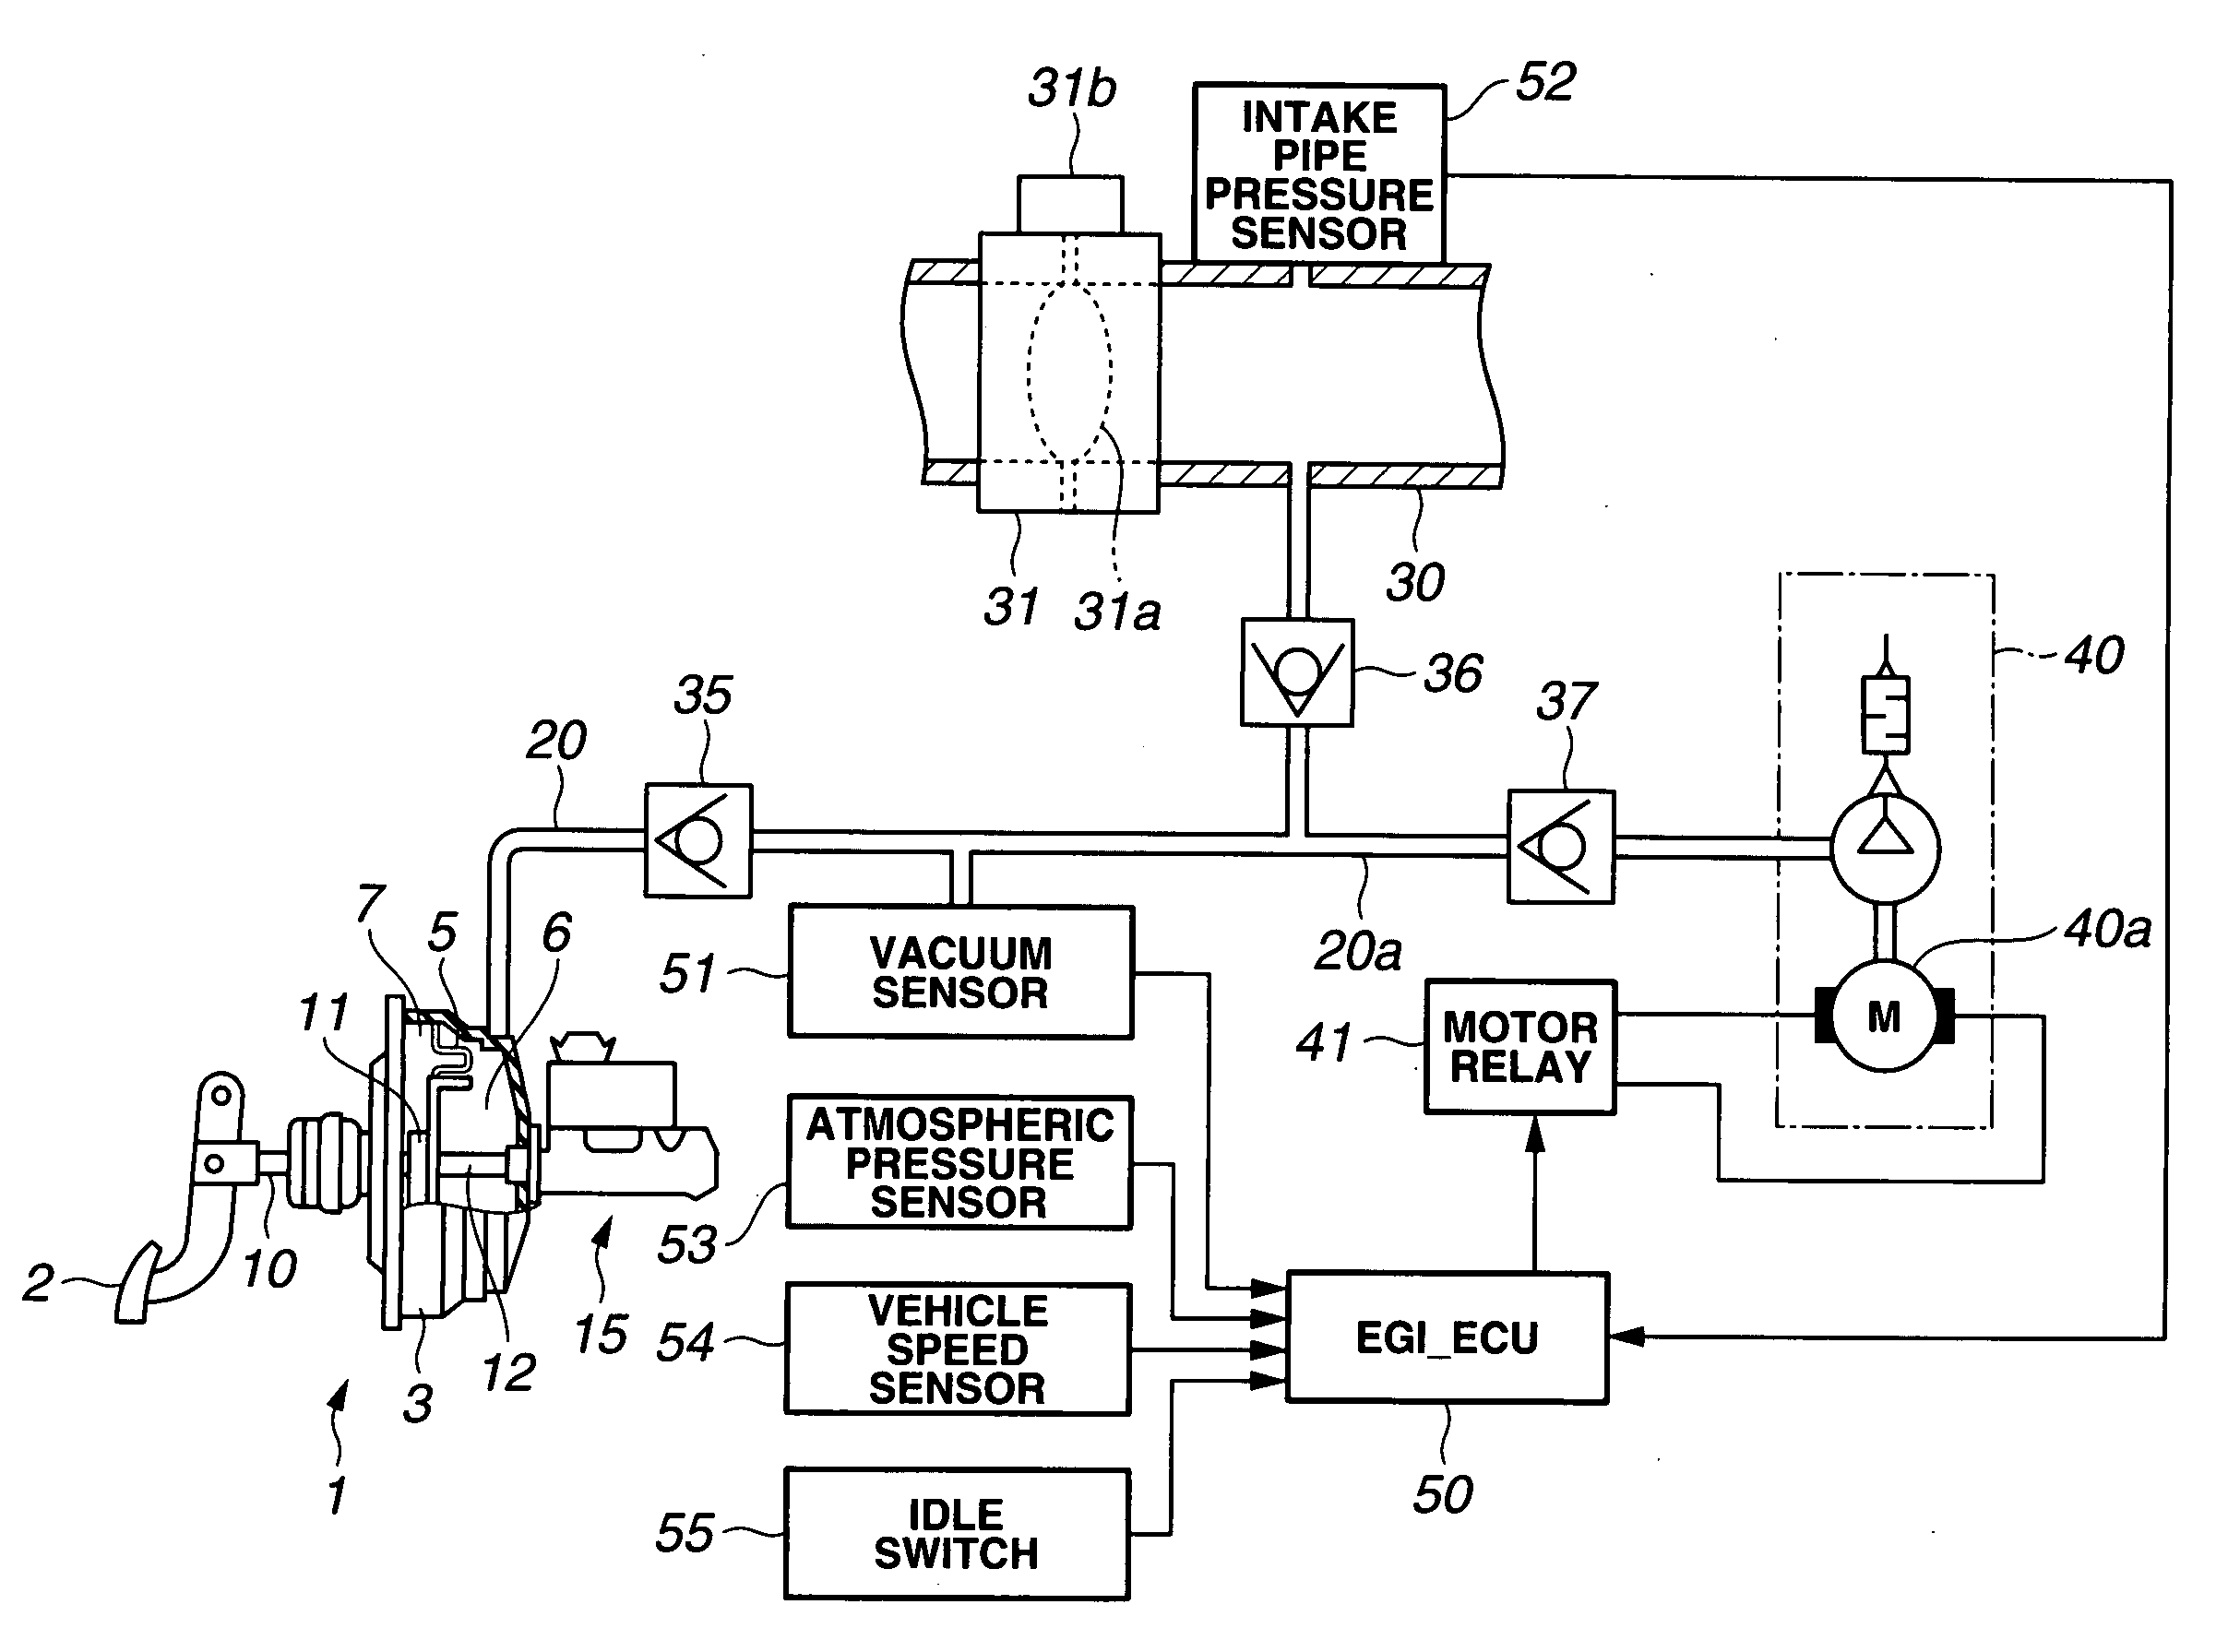 Control system for brake vacuum pump